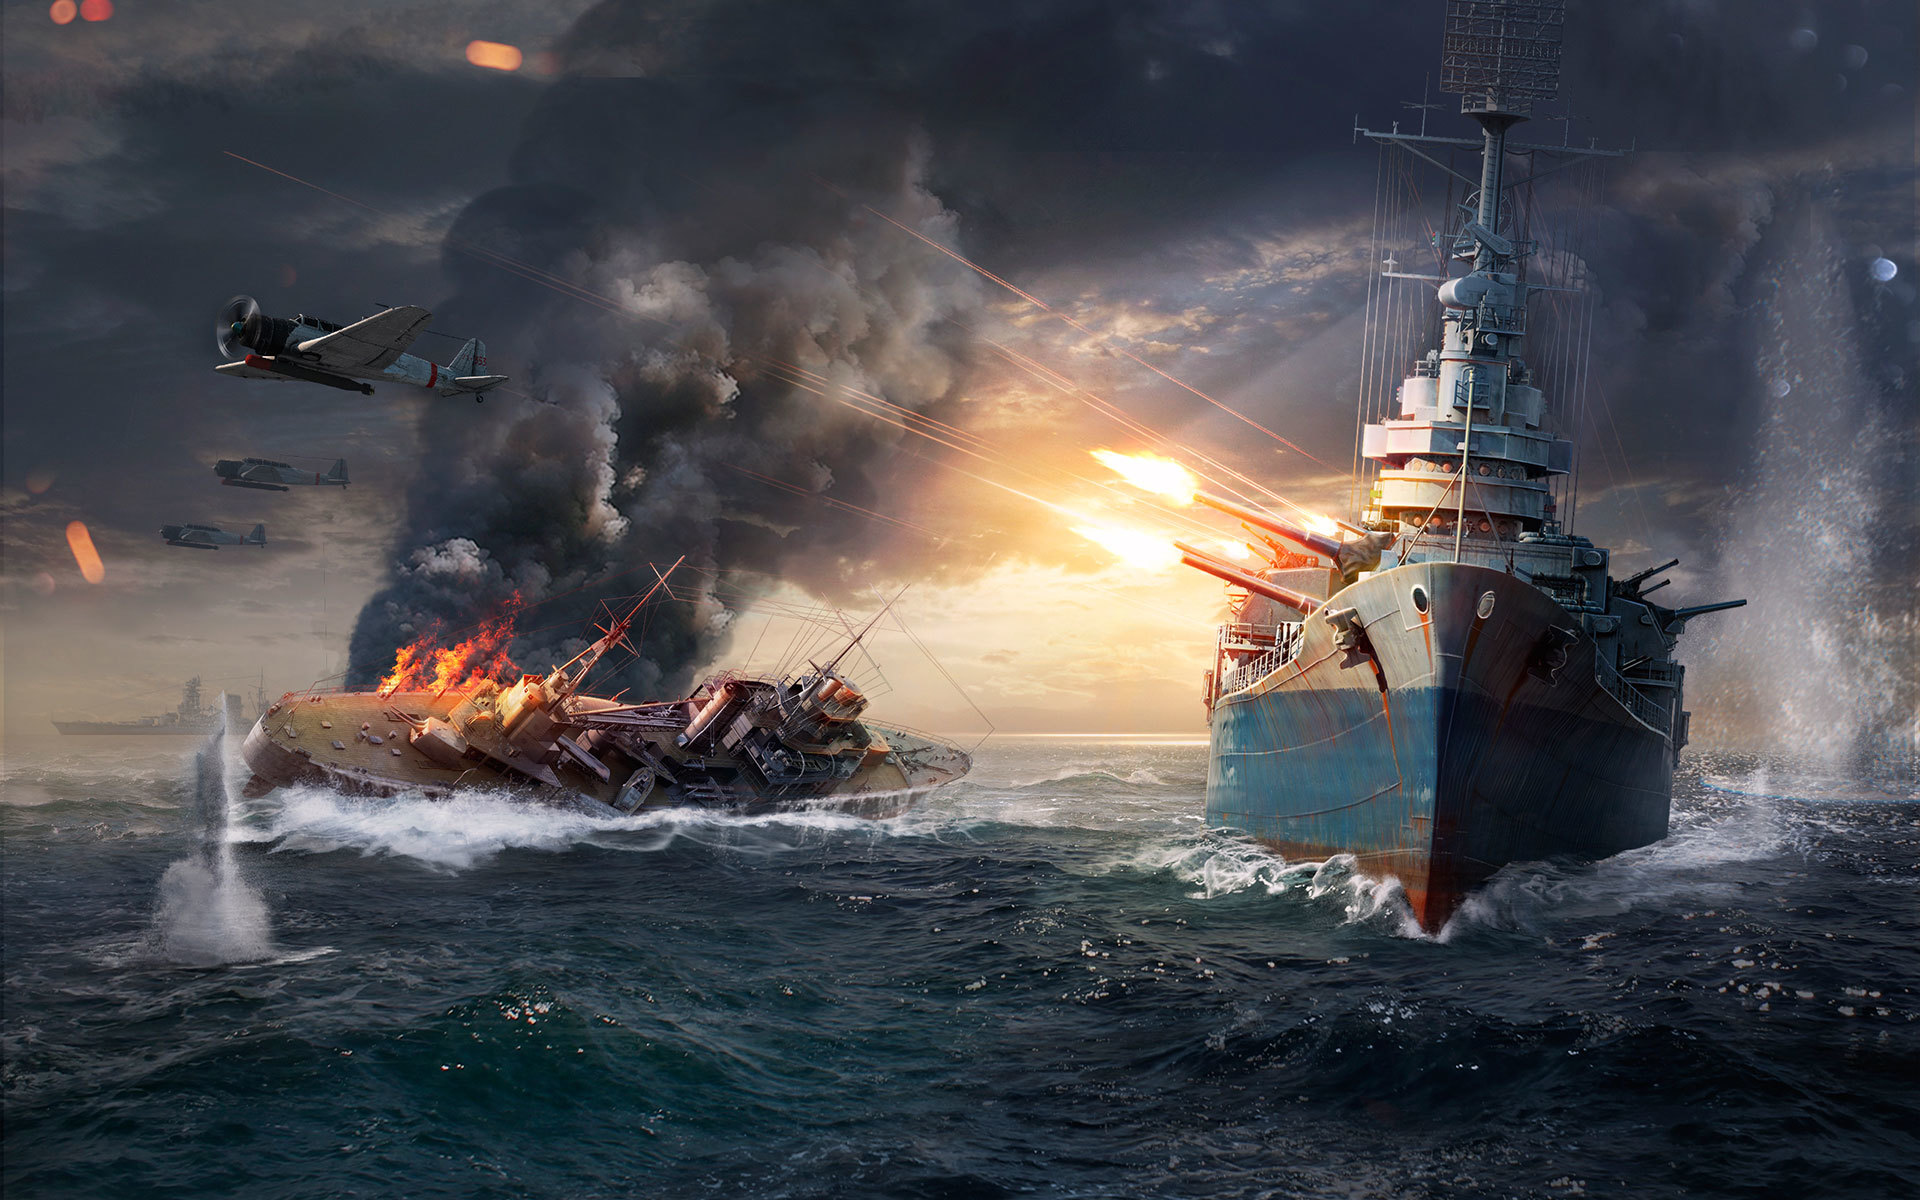 world of warships, video game, warships